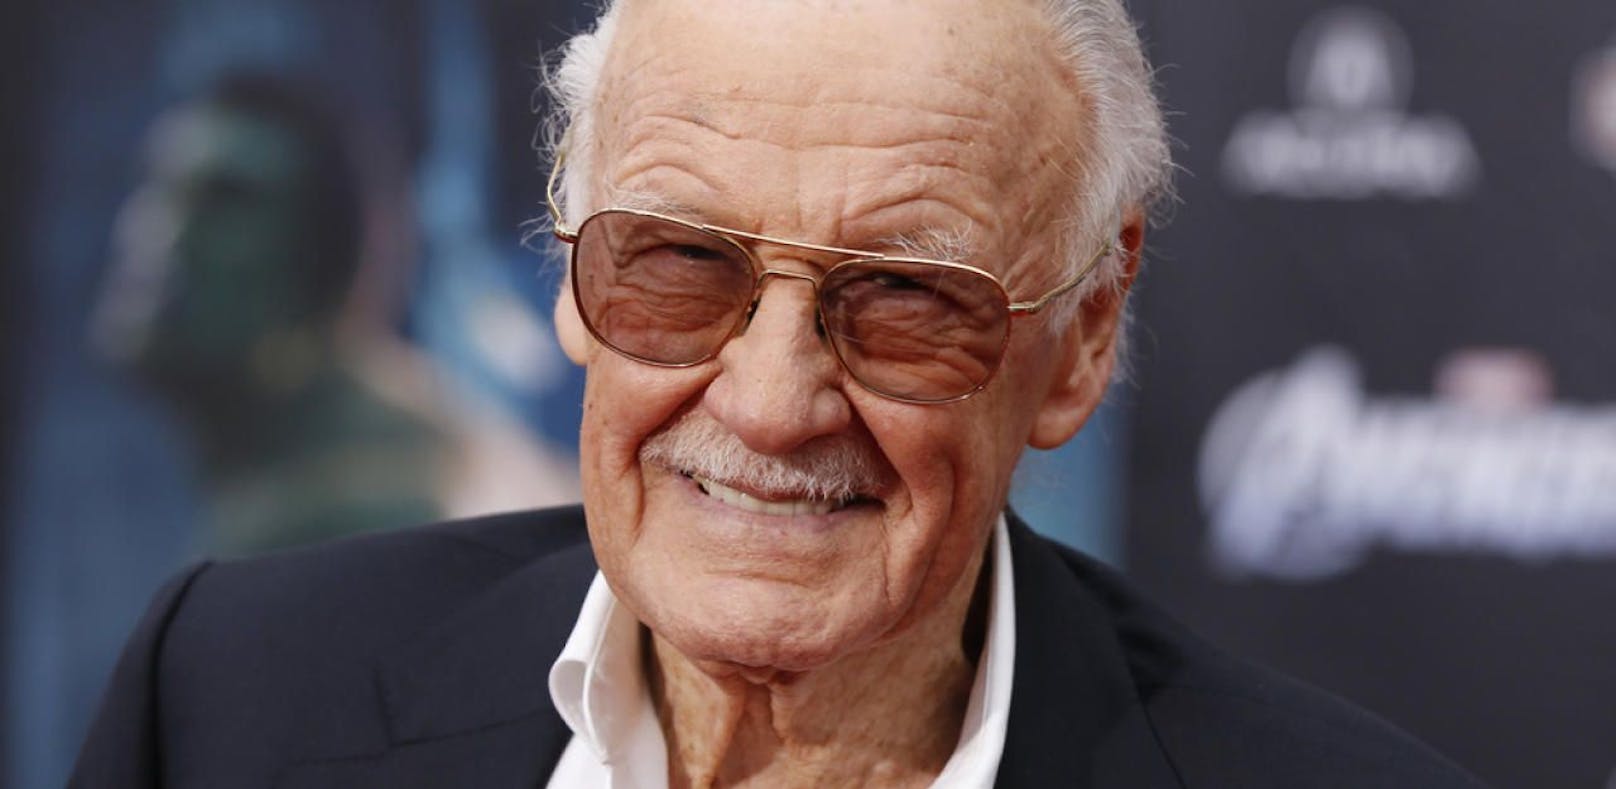 Marvel-Legende Stan Lee  in Spital eingeliefert